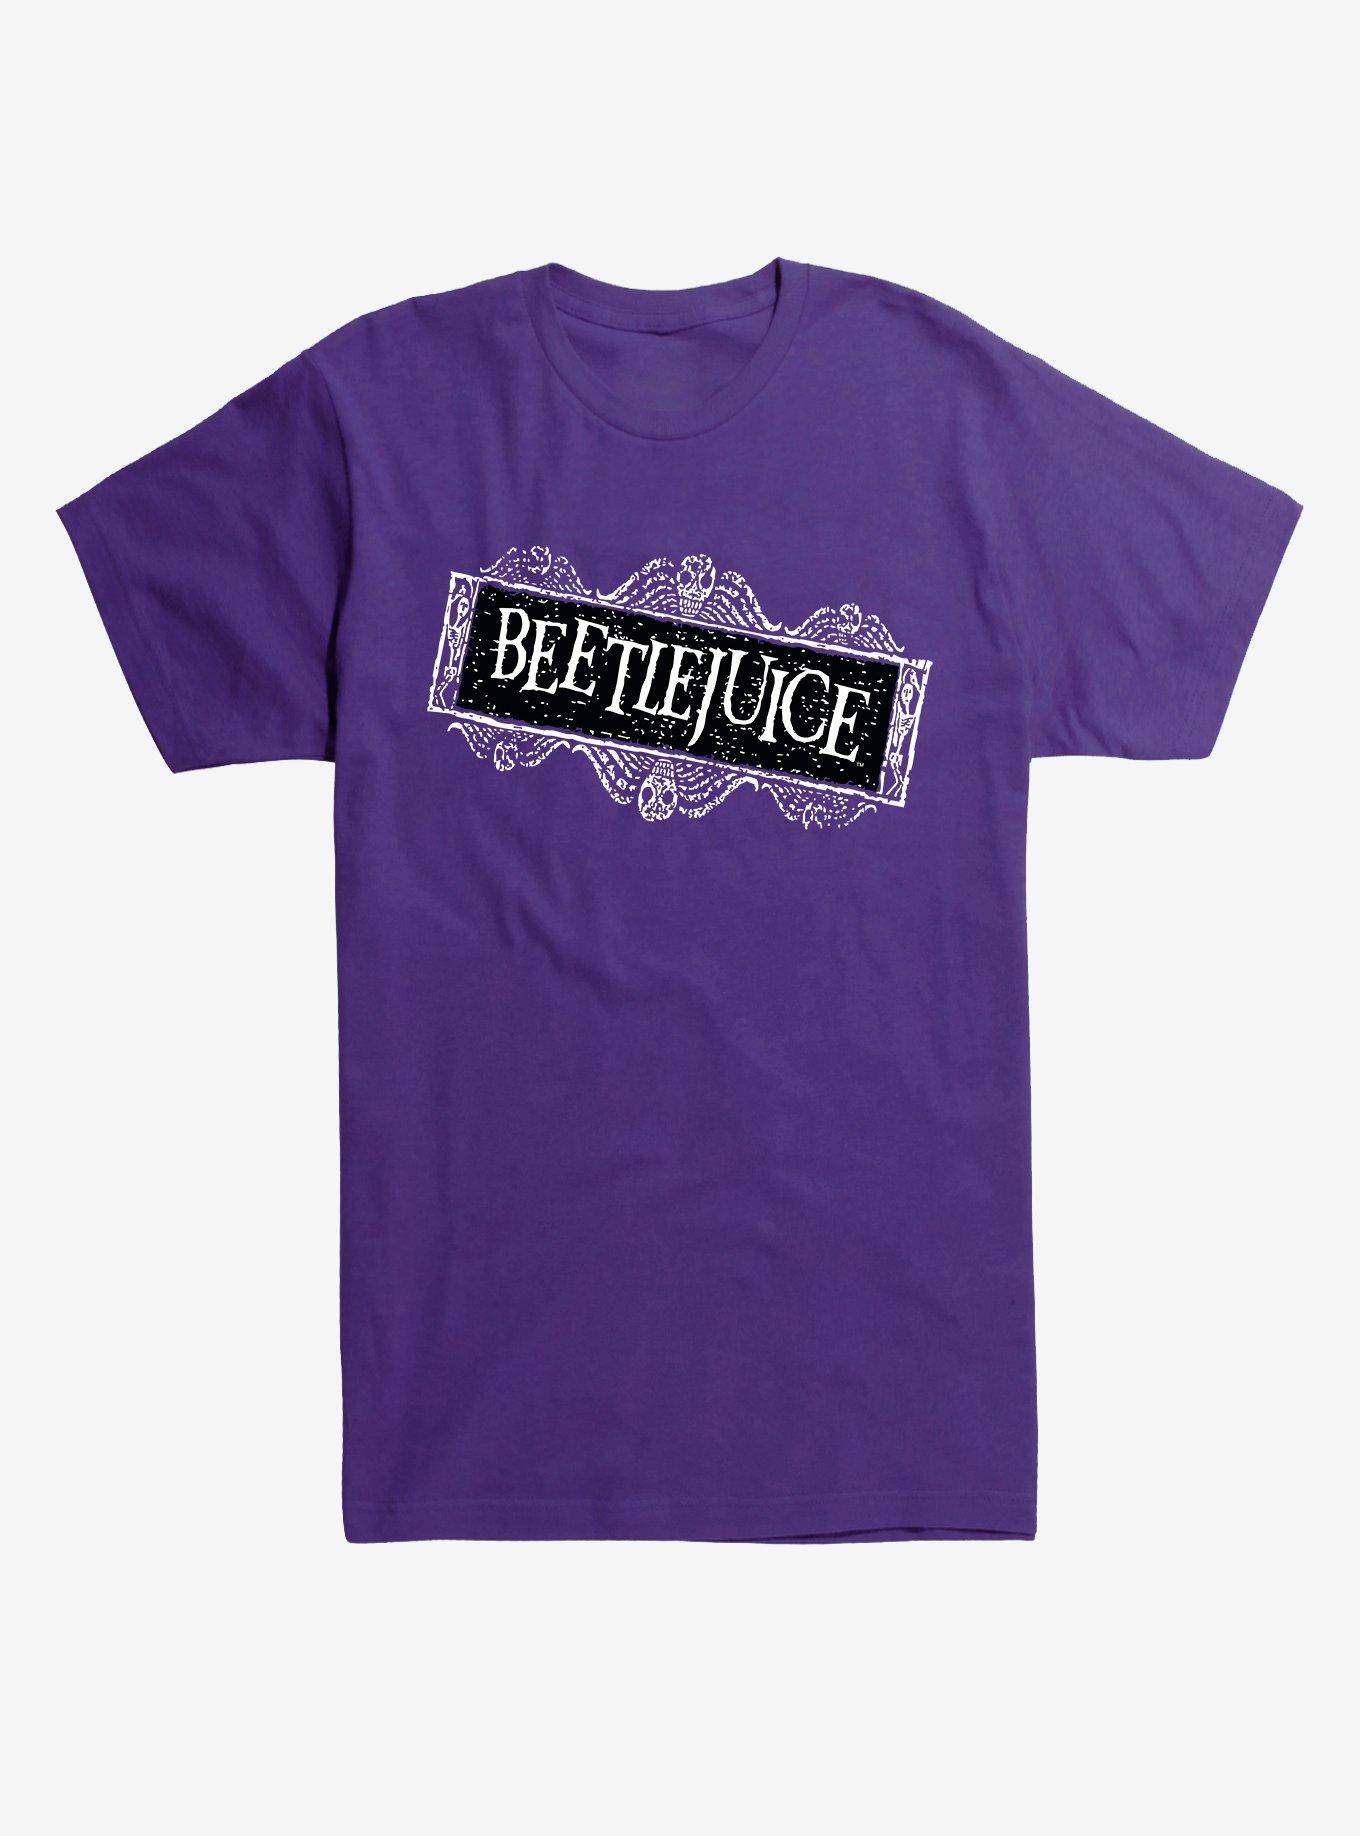 Beetlejuice Title Purple T-Shirt, PURPLE, hi-res